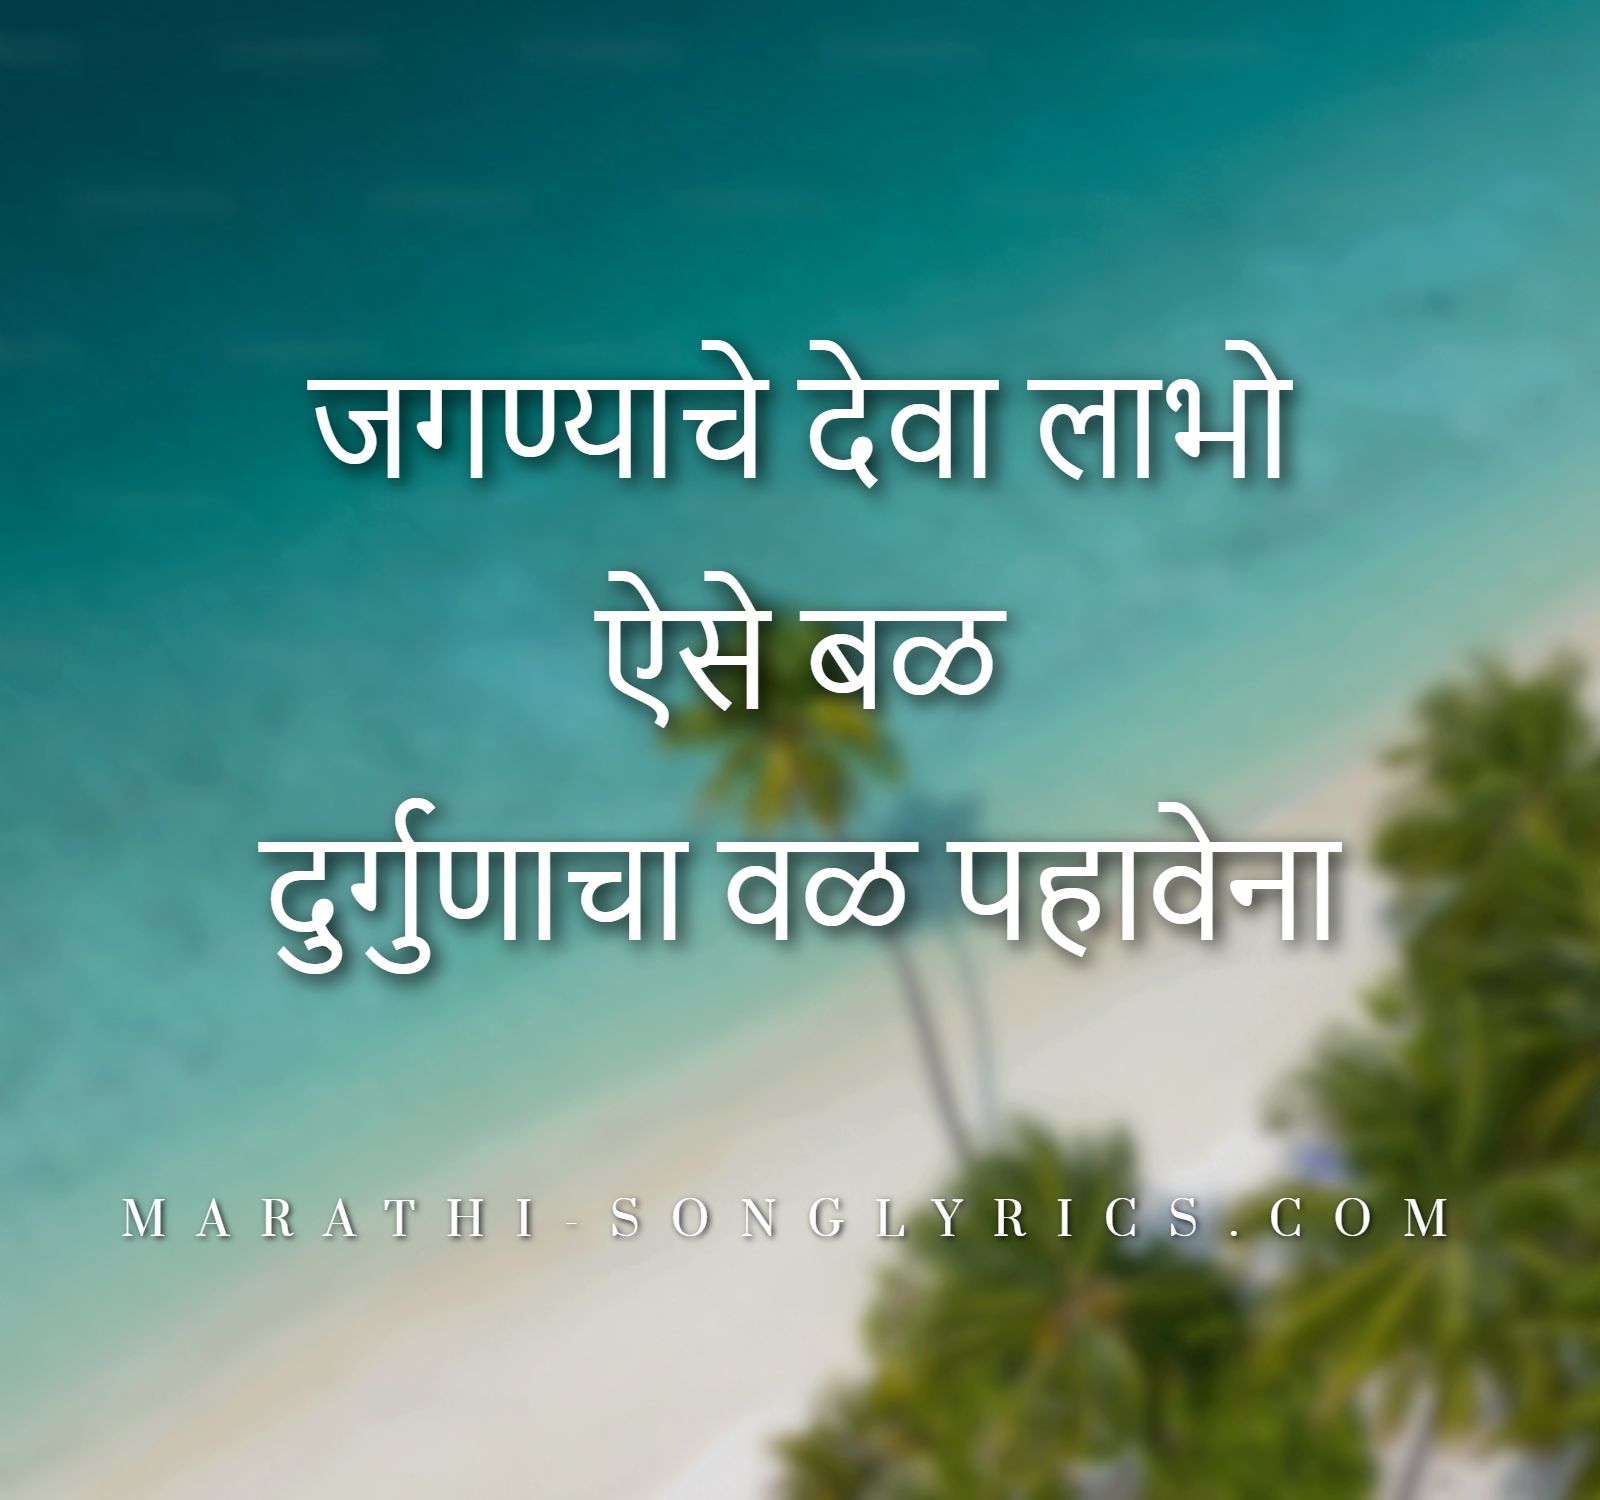 Jagnyache Deva Lyrics in Marathi